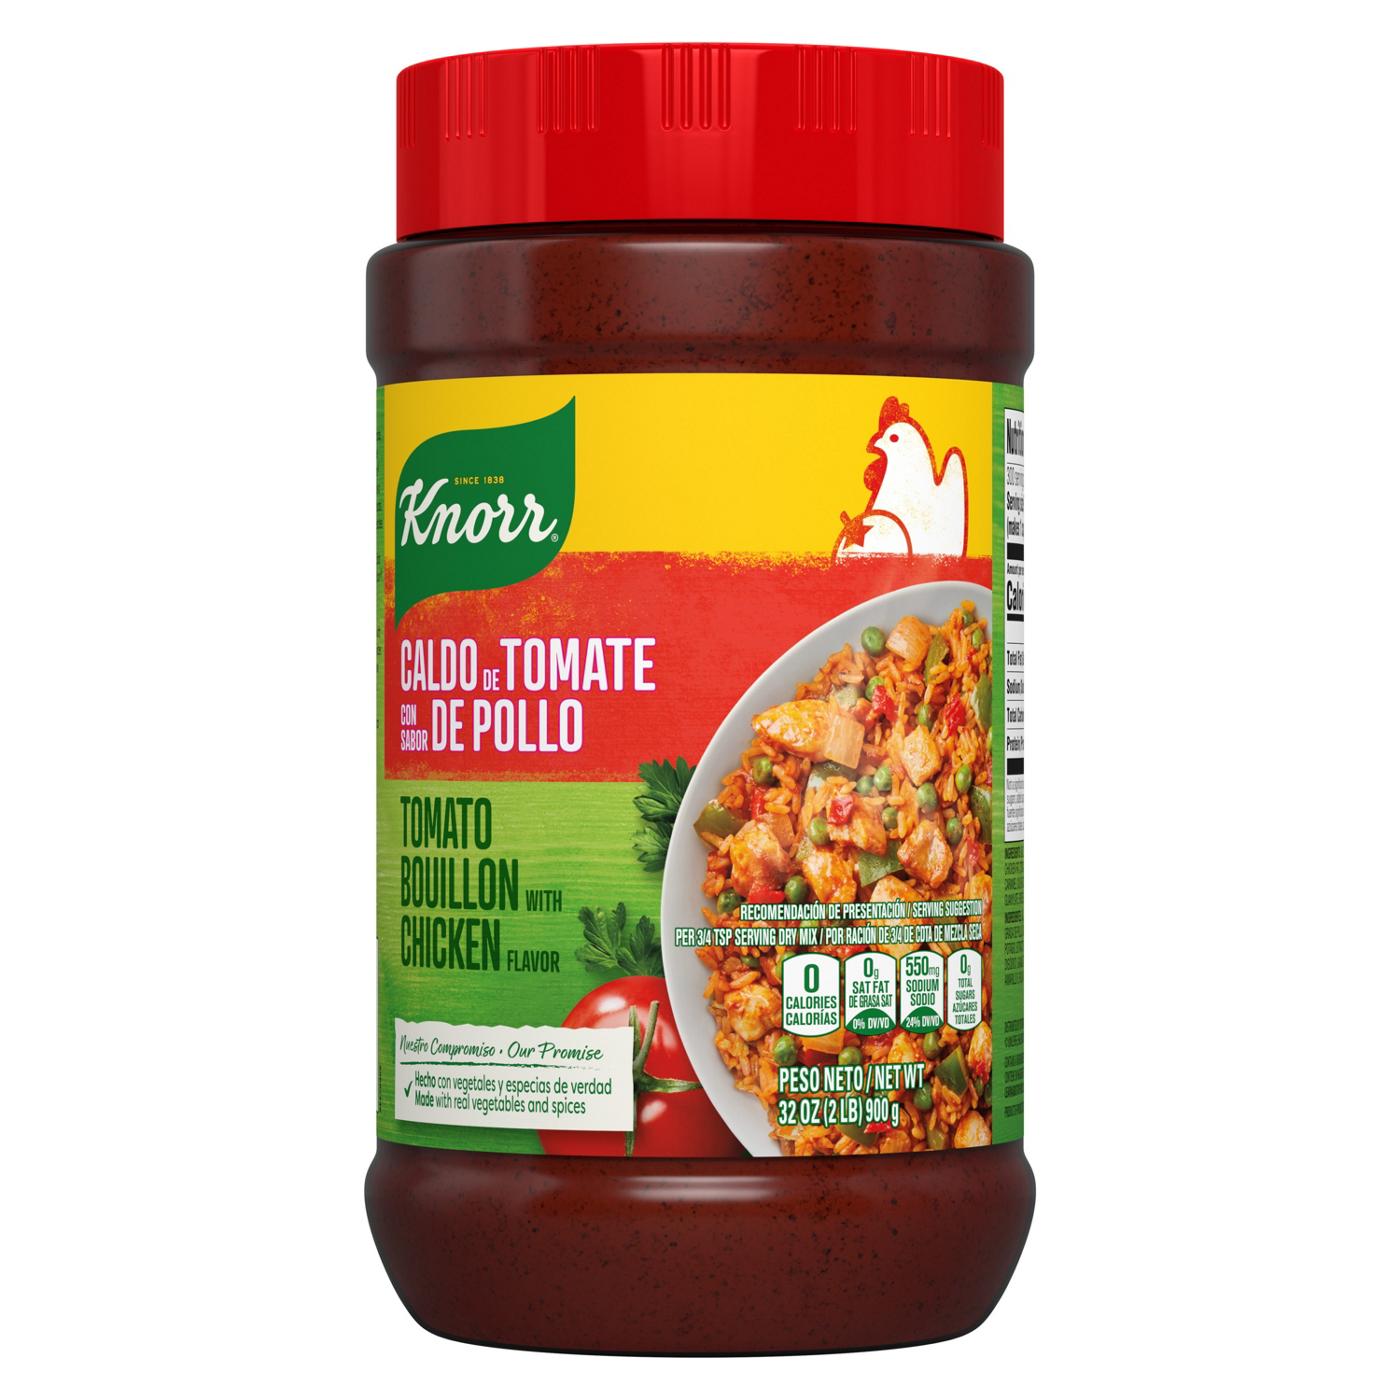 Knorr Tomato Chicken Granulated Bouillon; image 1 of 12